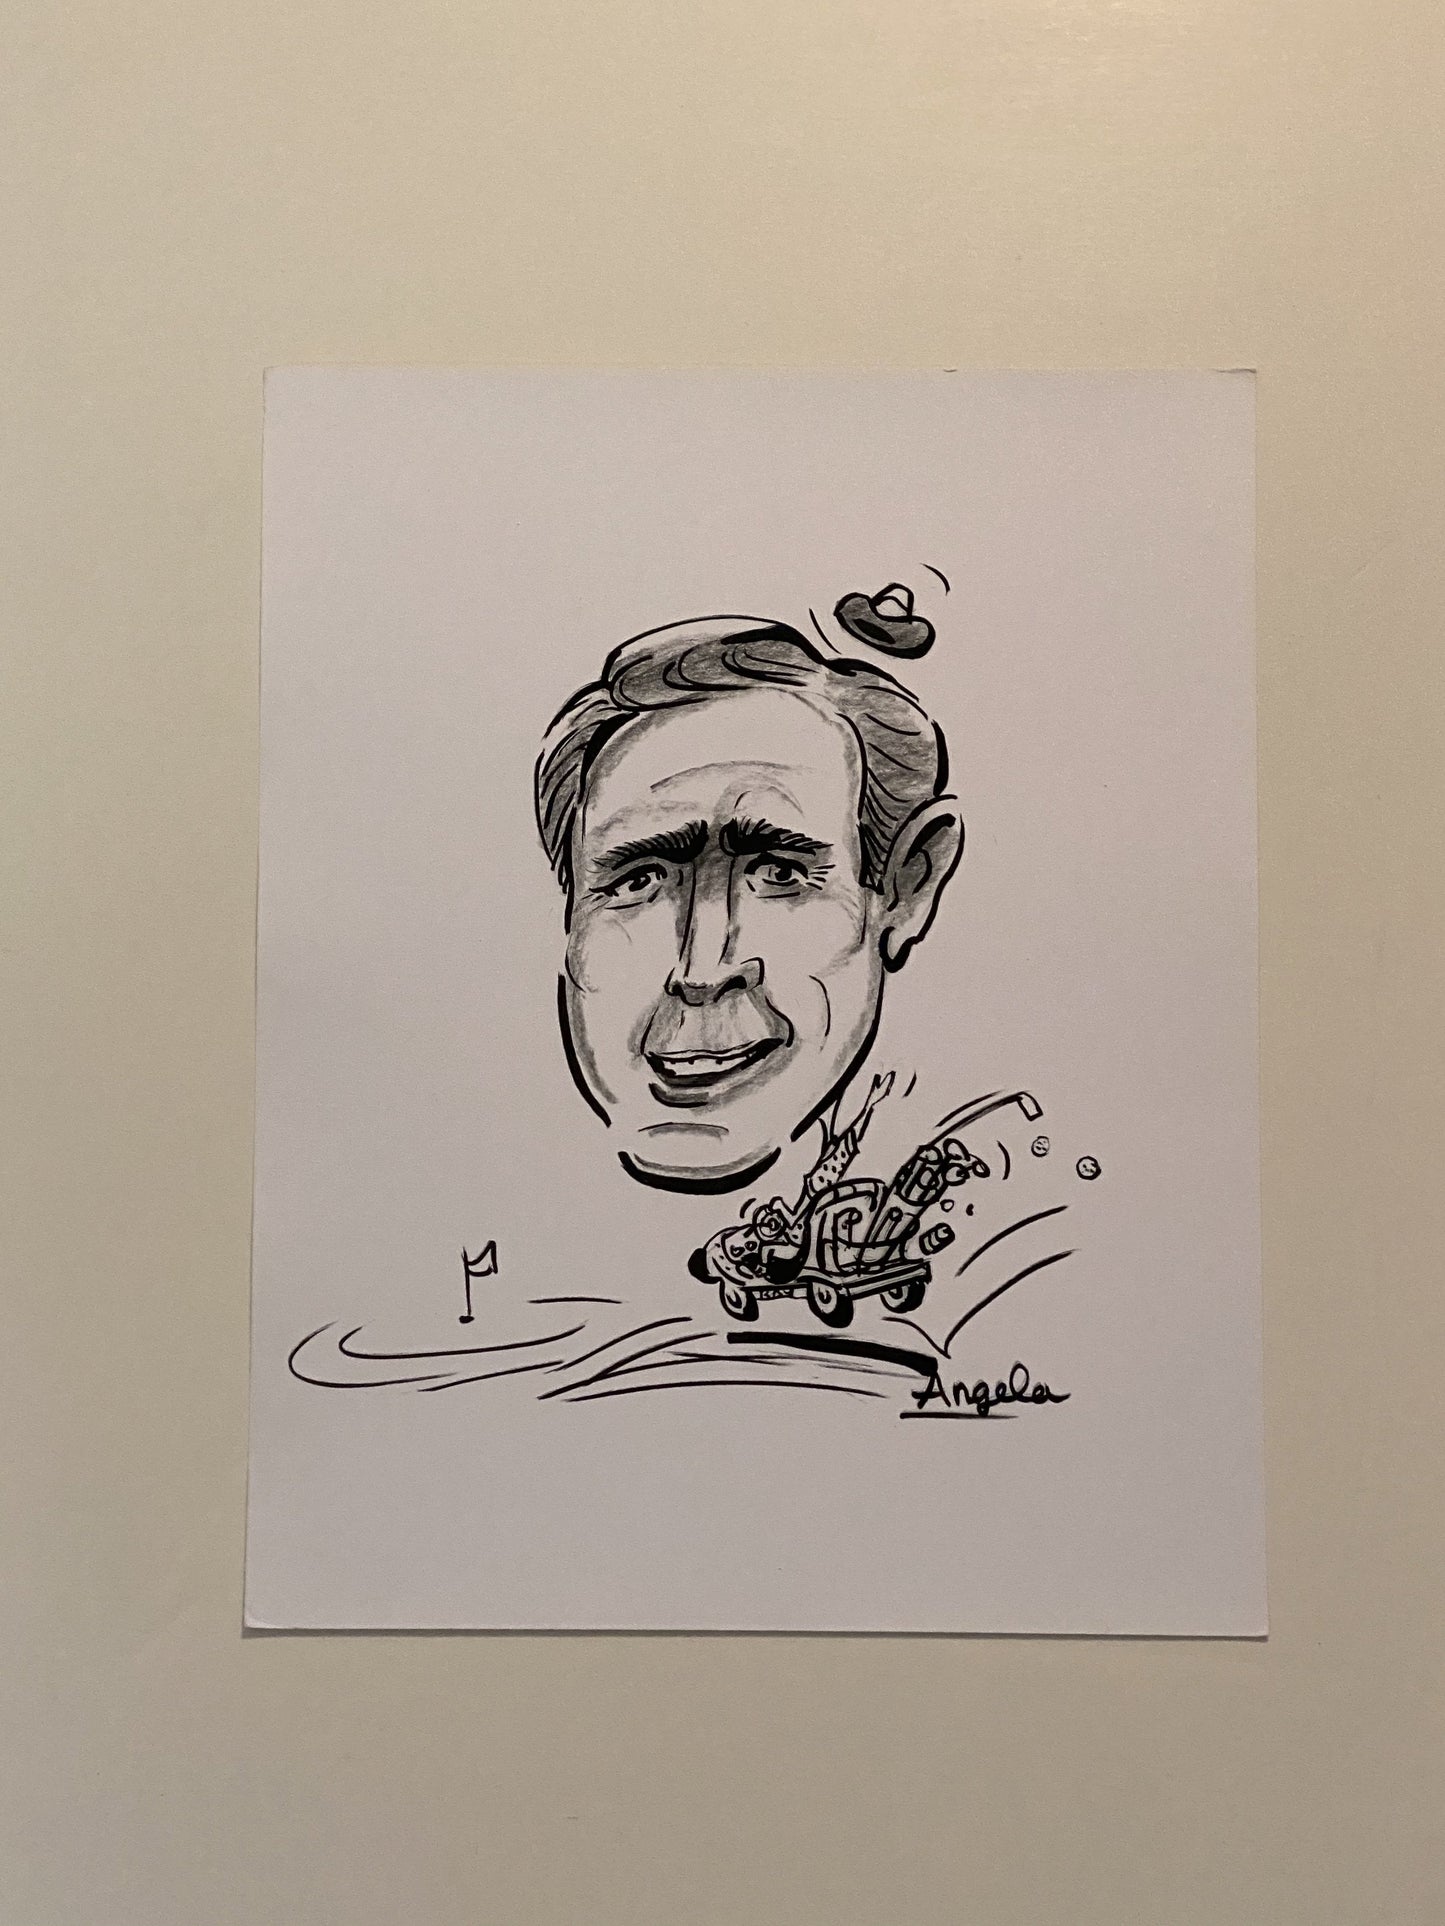 BONES: Angela's George W. Bush Golf Cart Caricature